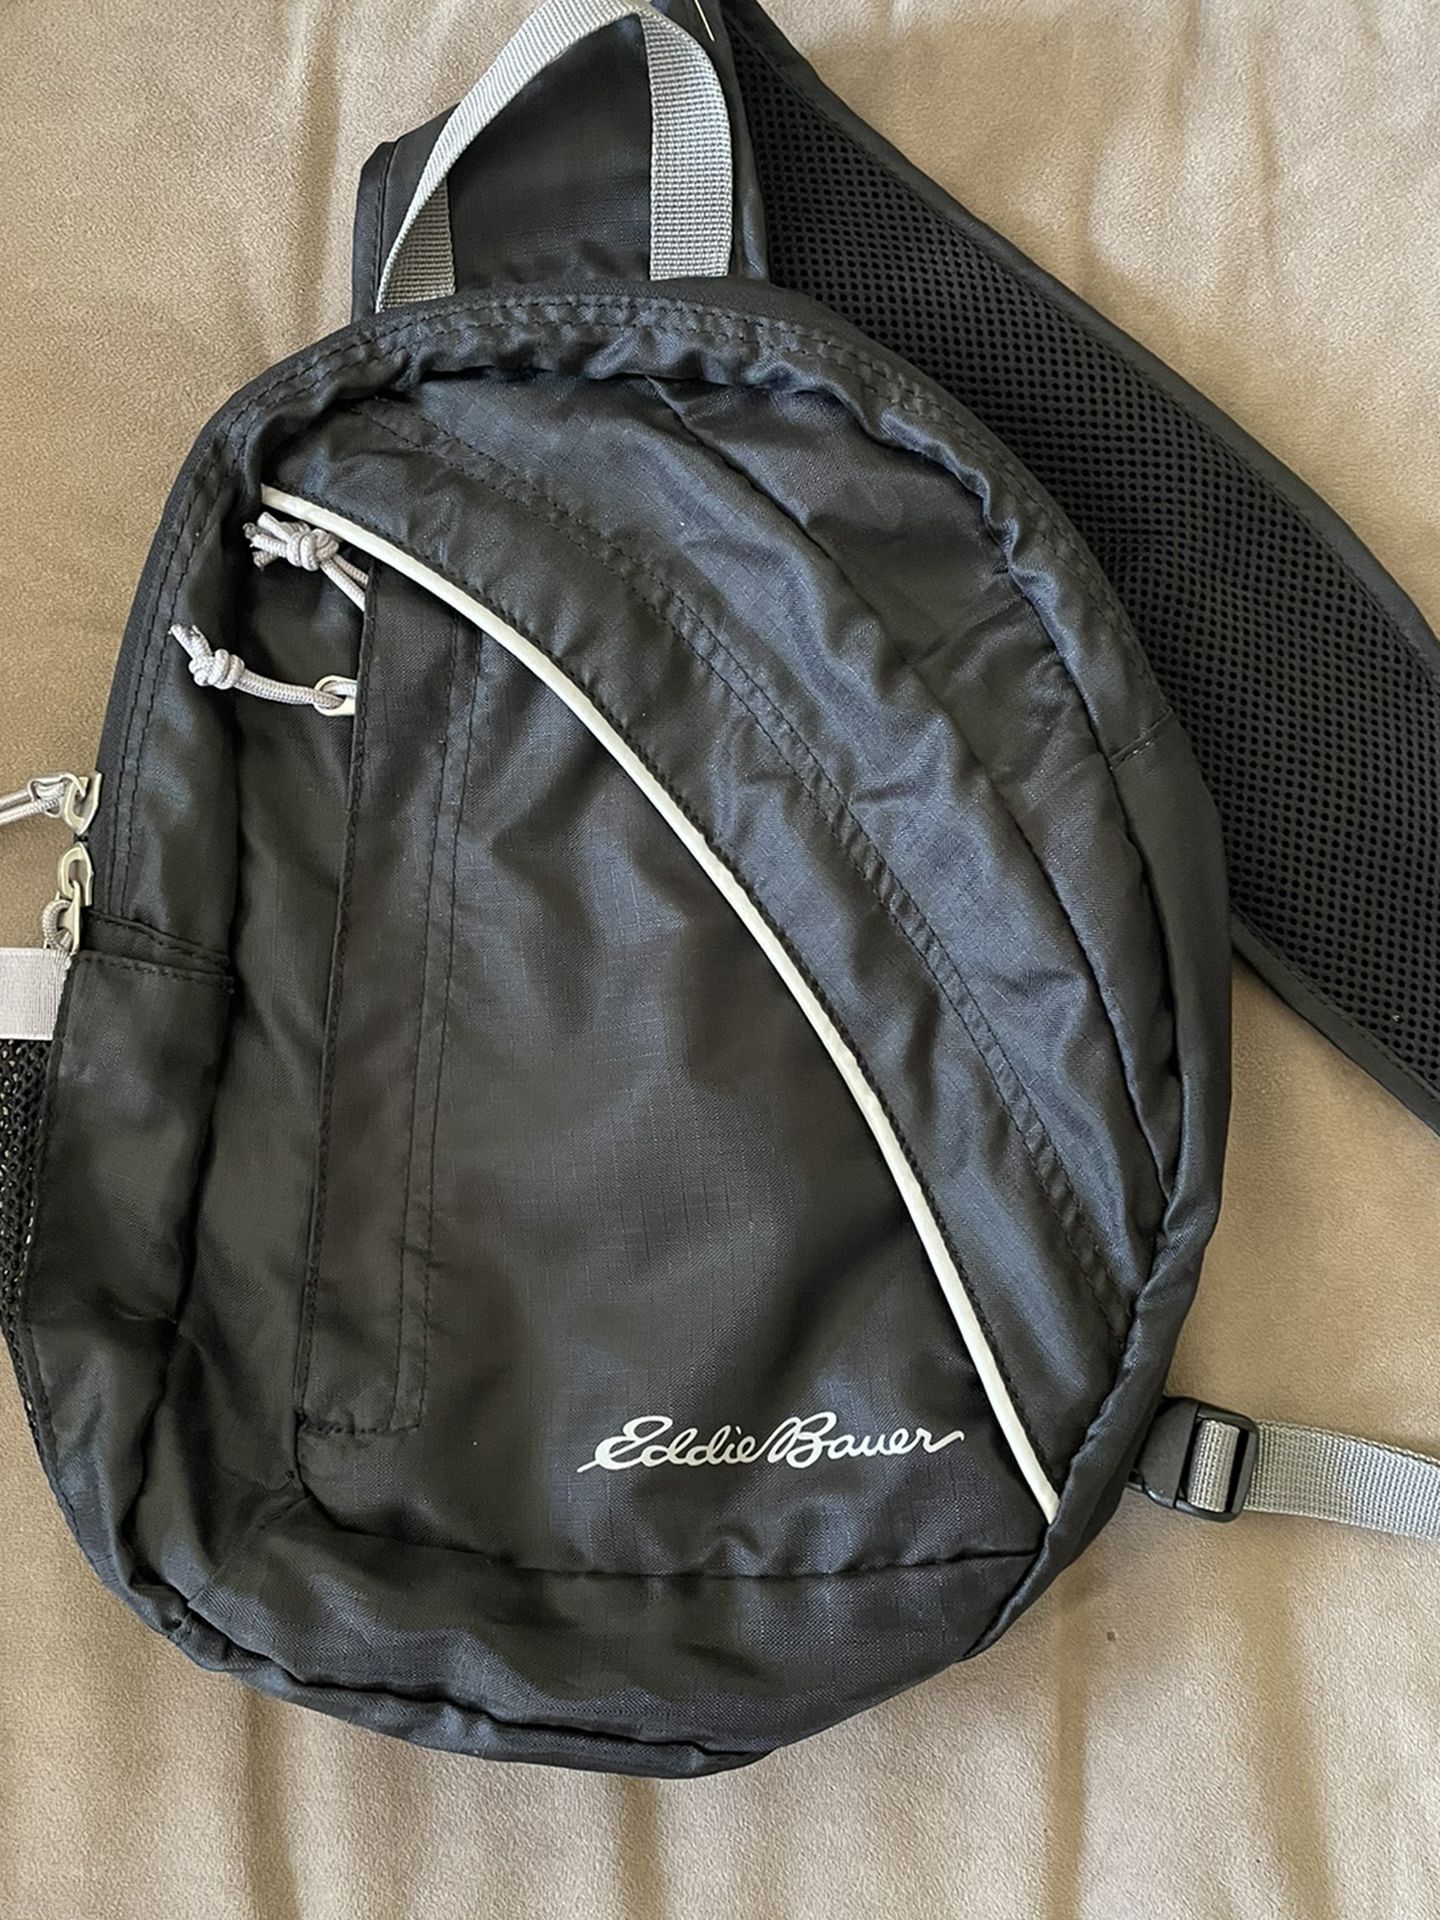 Eddie Bauer Crusier Sling Bag 10L Black Brand New